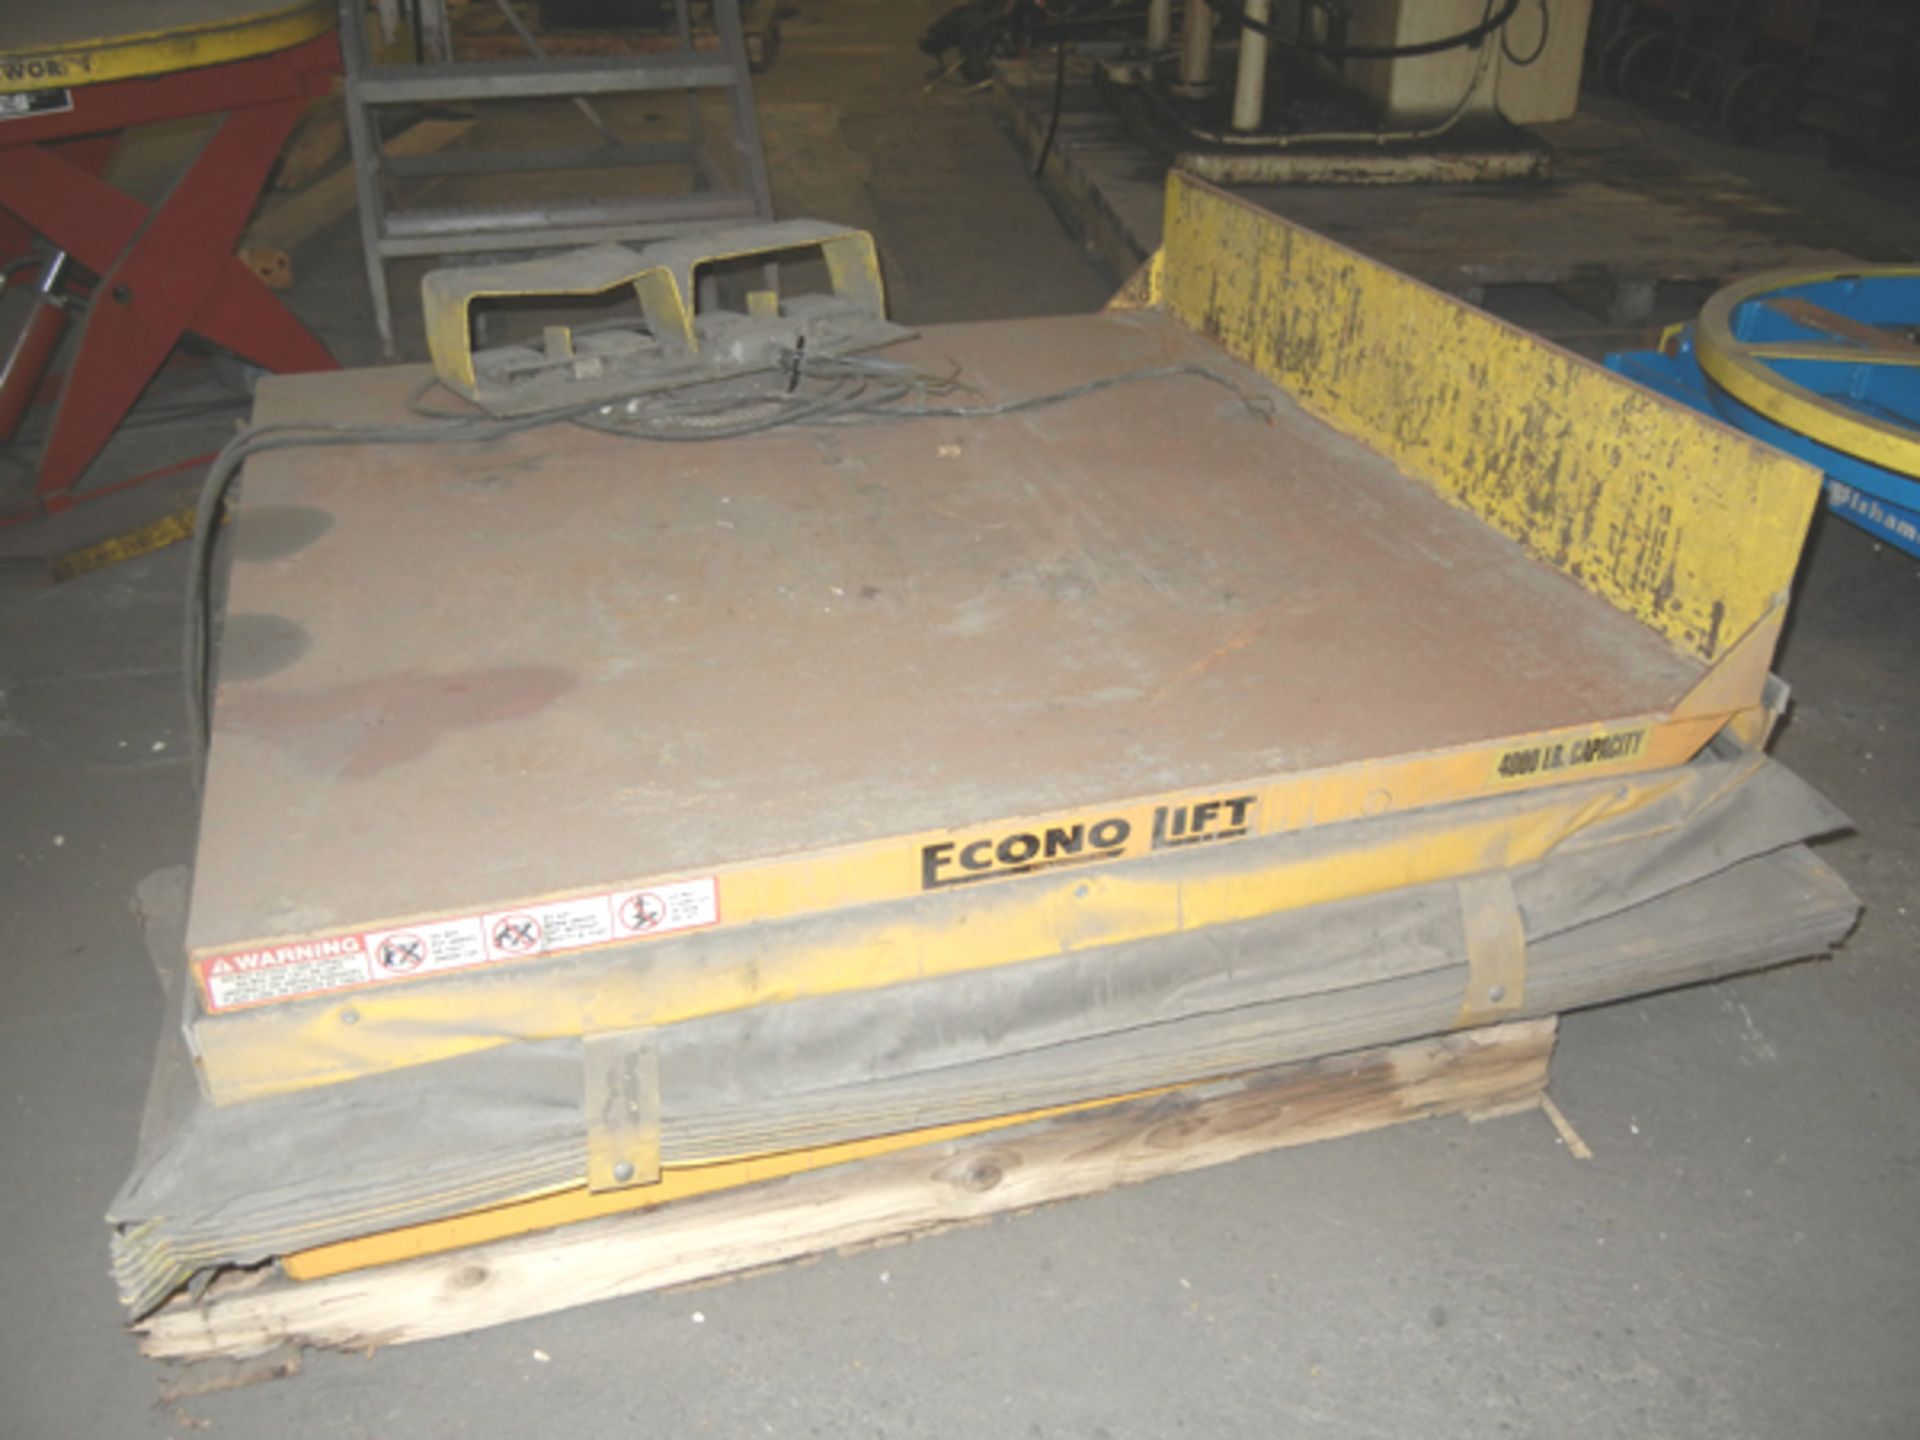 Econo Lift 4,000 lb capacity Lift Table with foot pedal controls, 48" x 48" platform